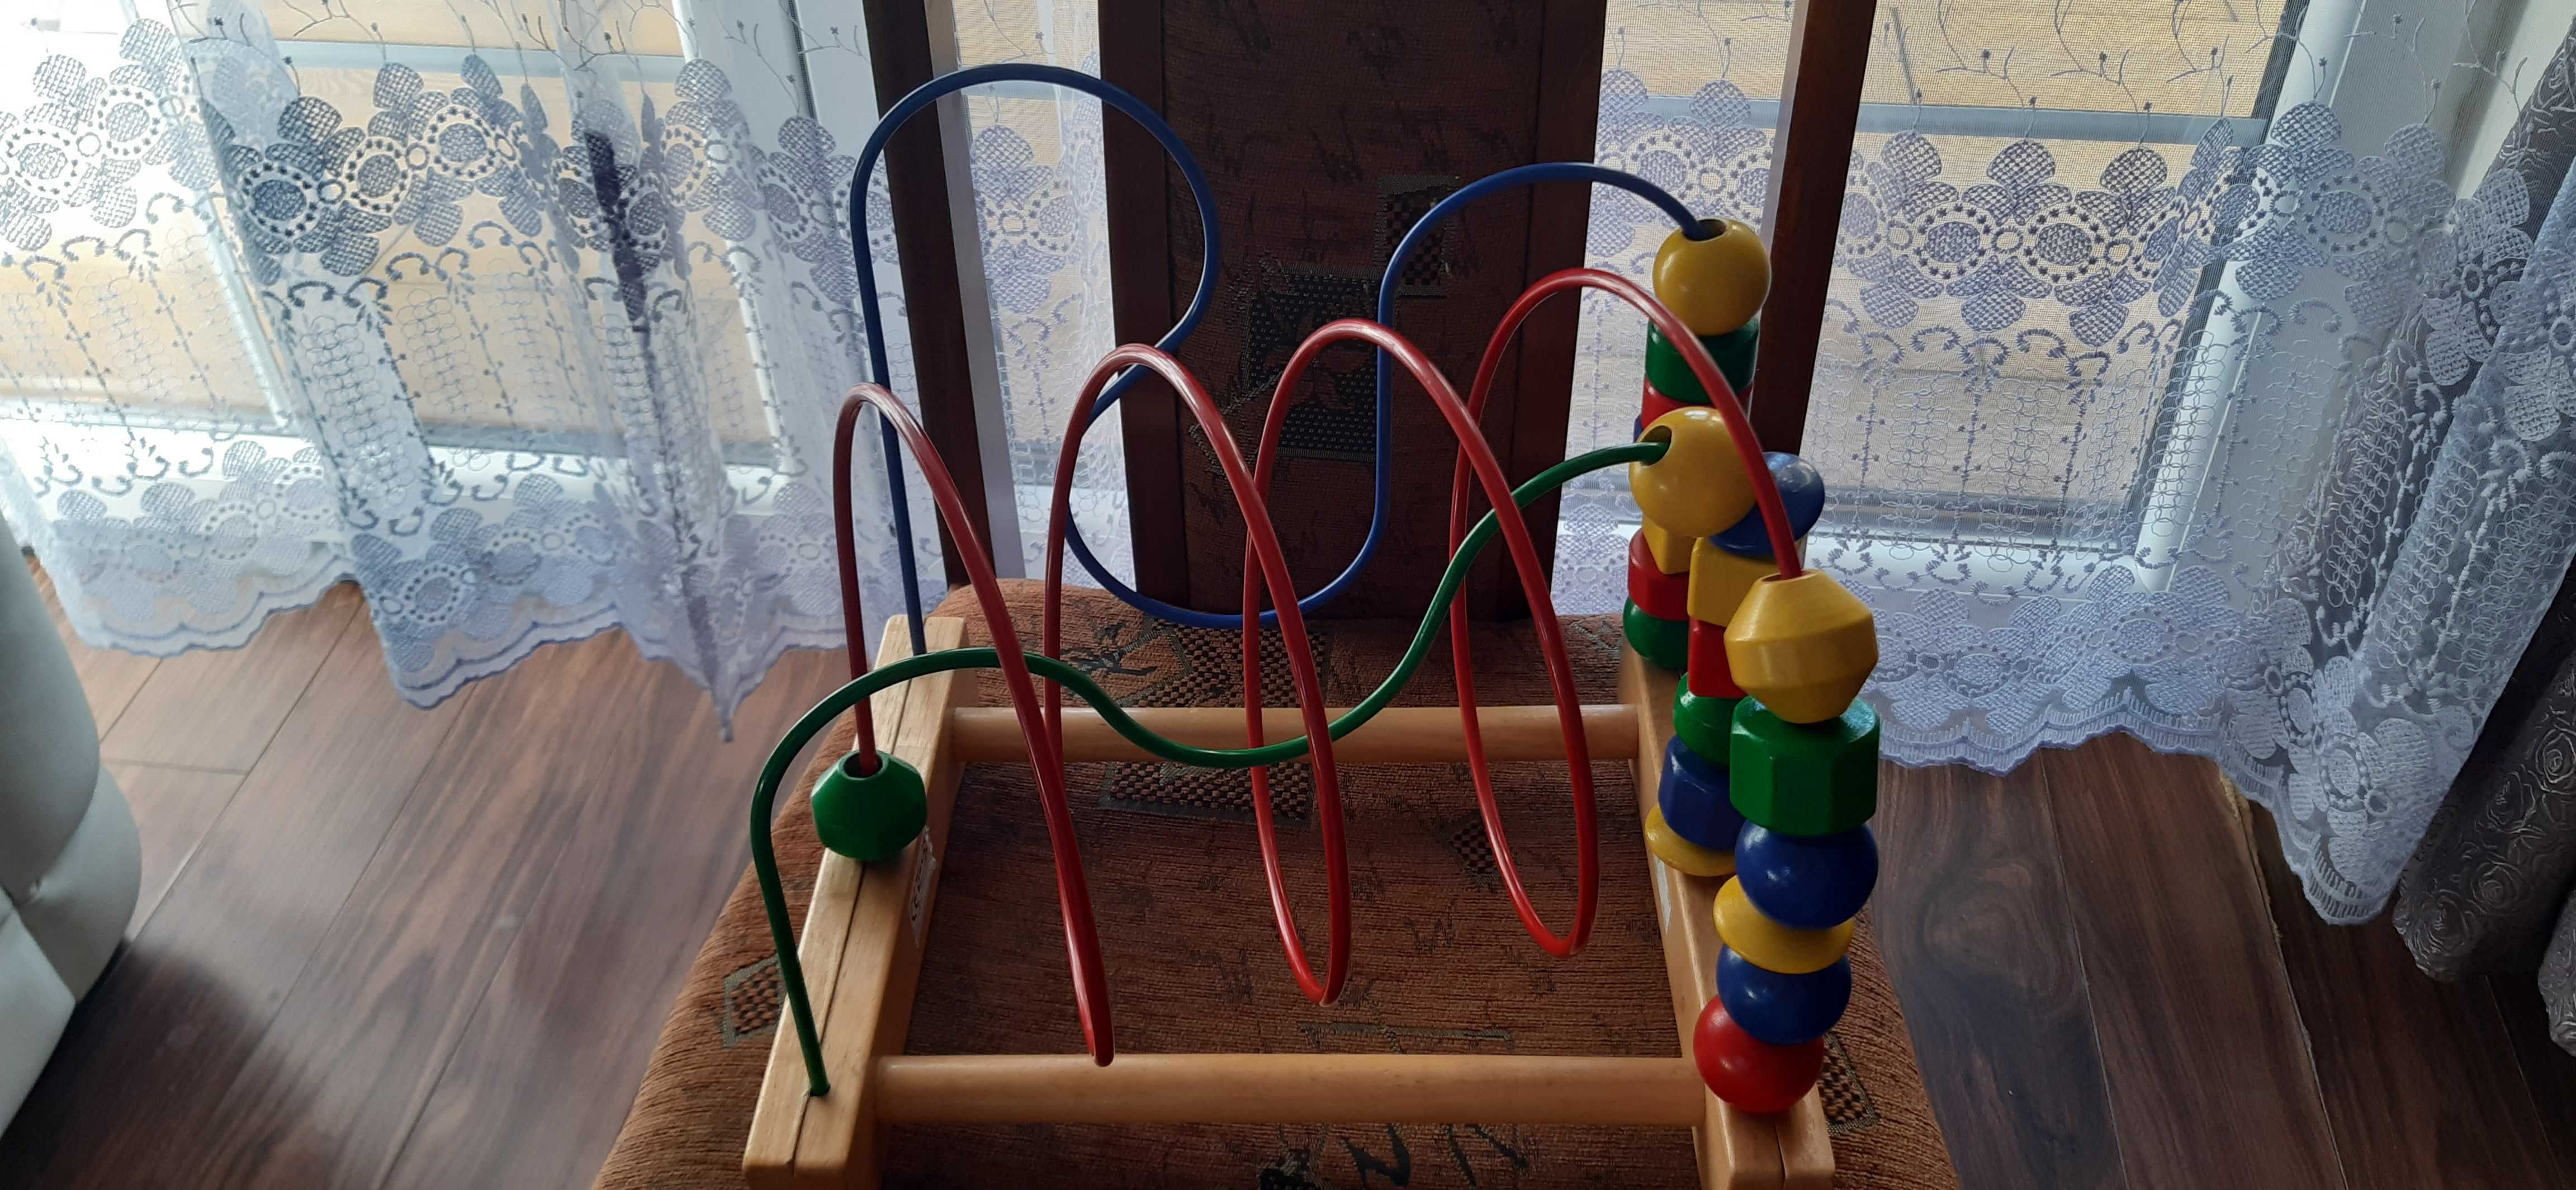 Mula Ikea zabawka dla dziecka